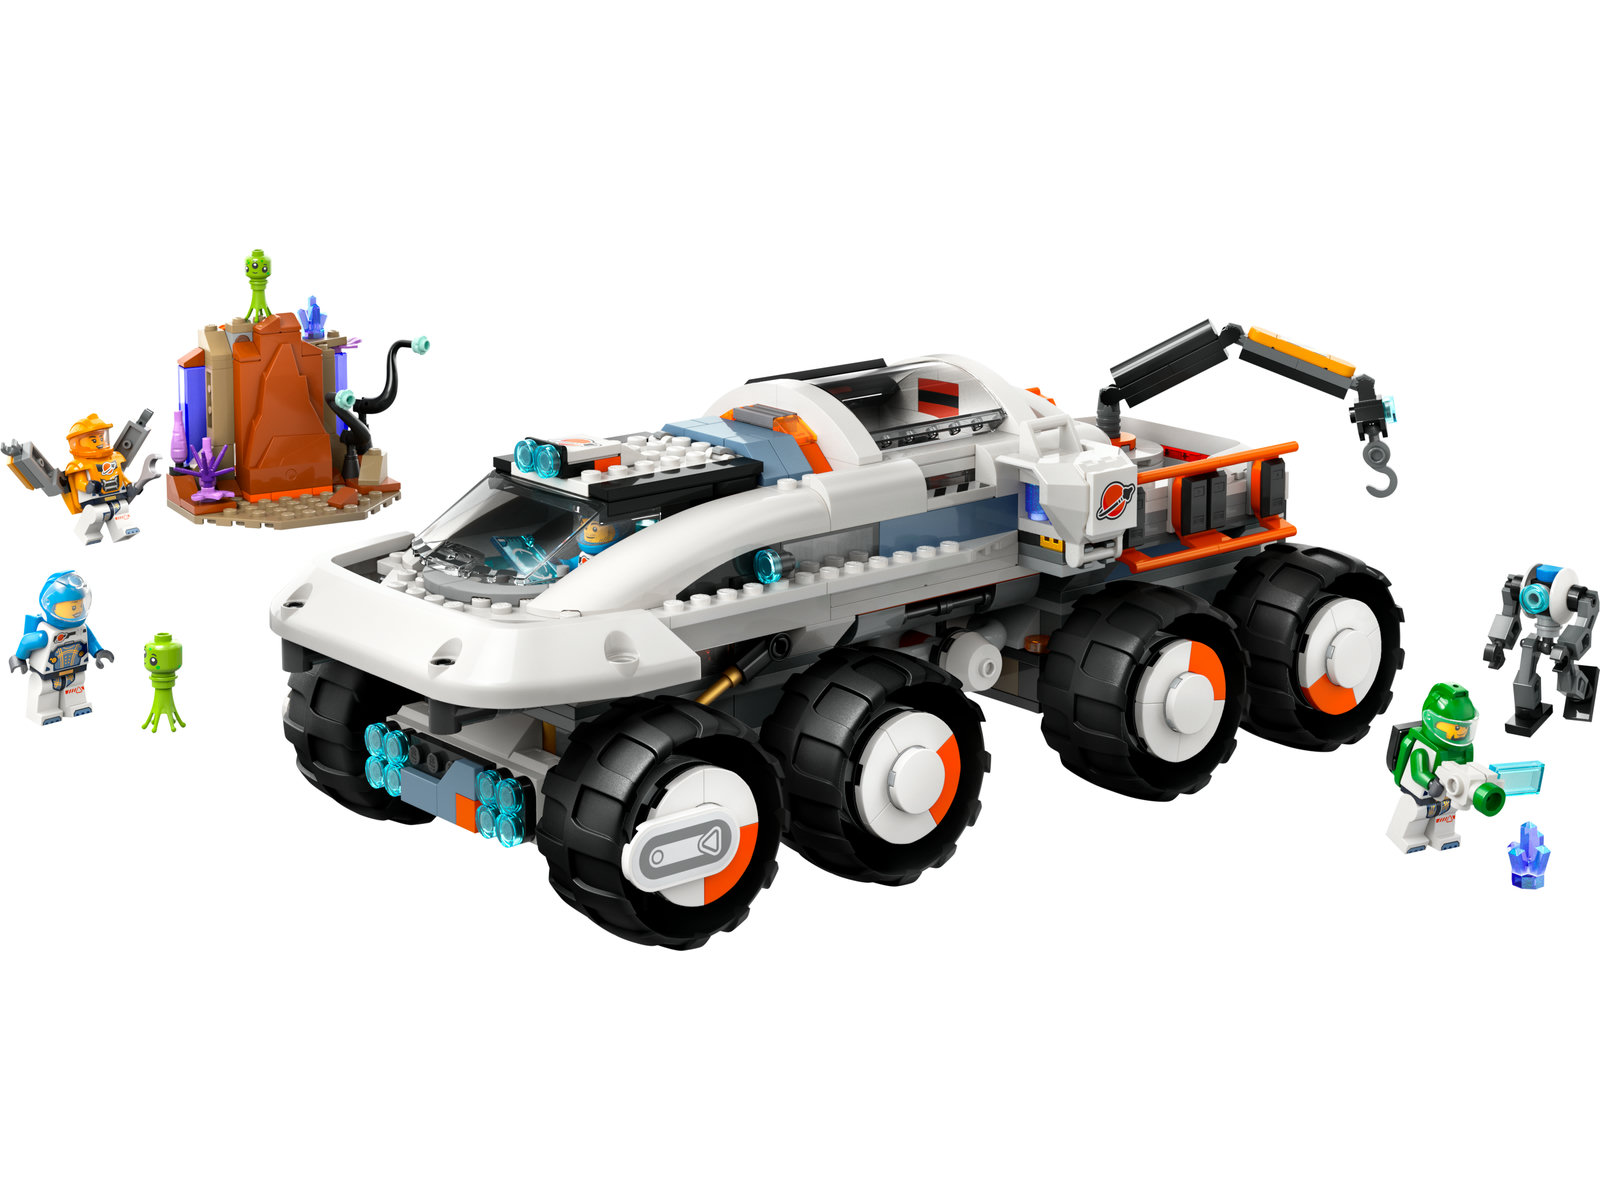 LEGO® City 60432 - Kommando-Rover mit Ladekran